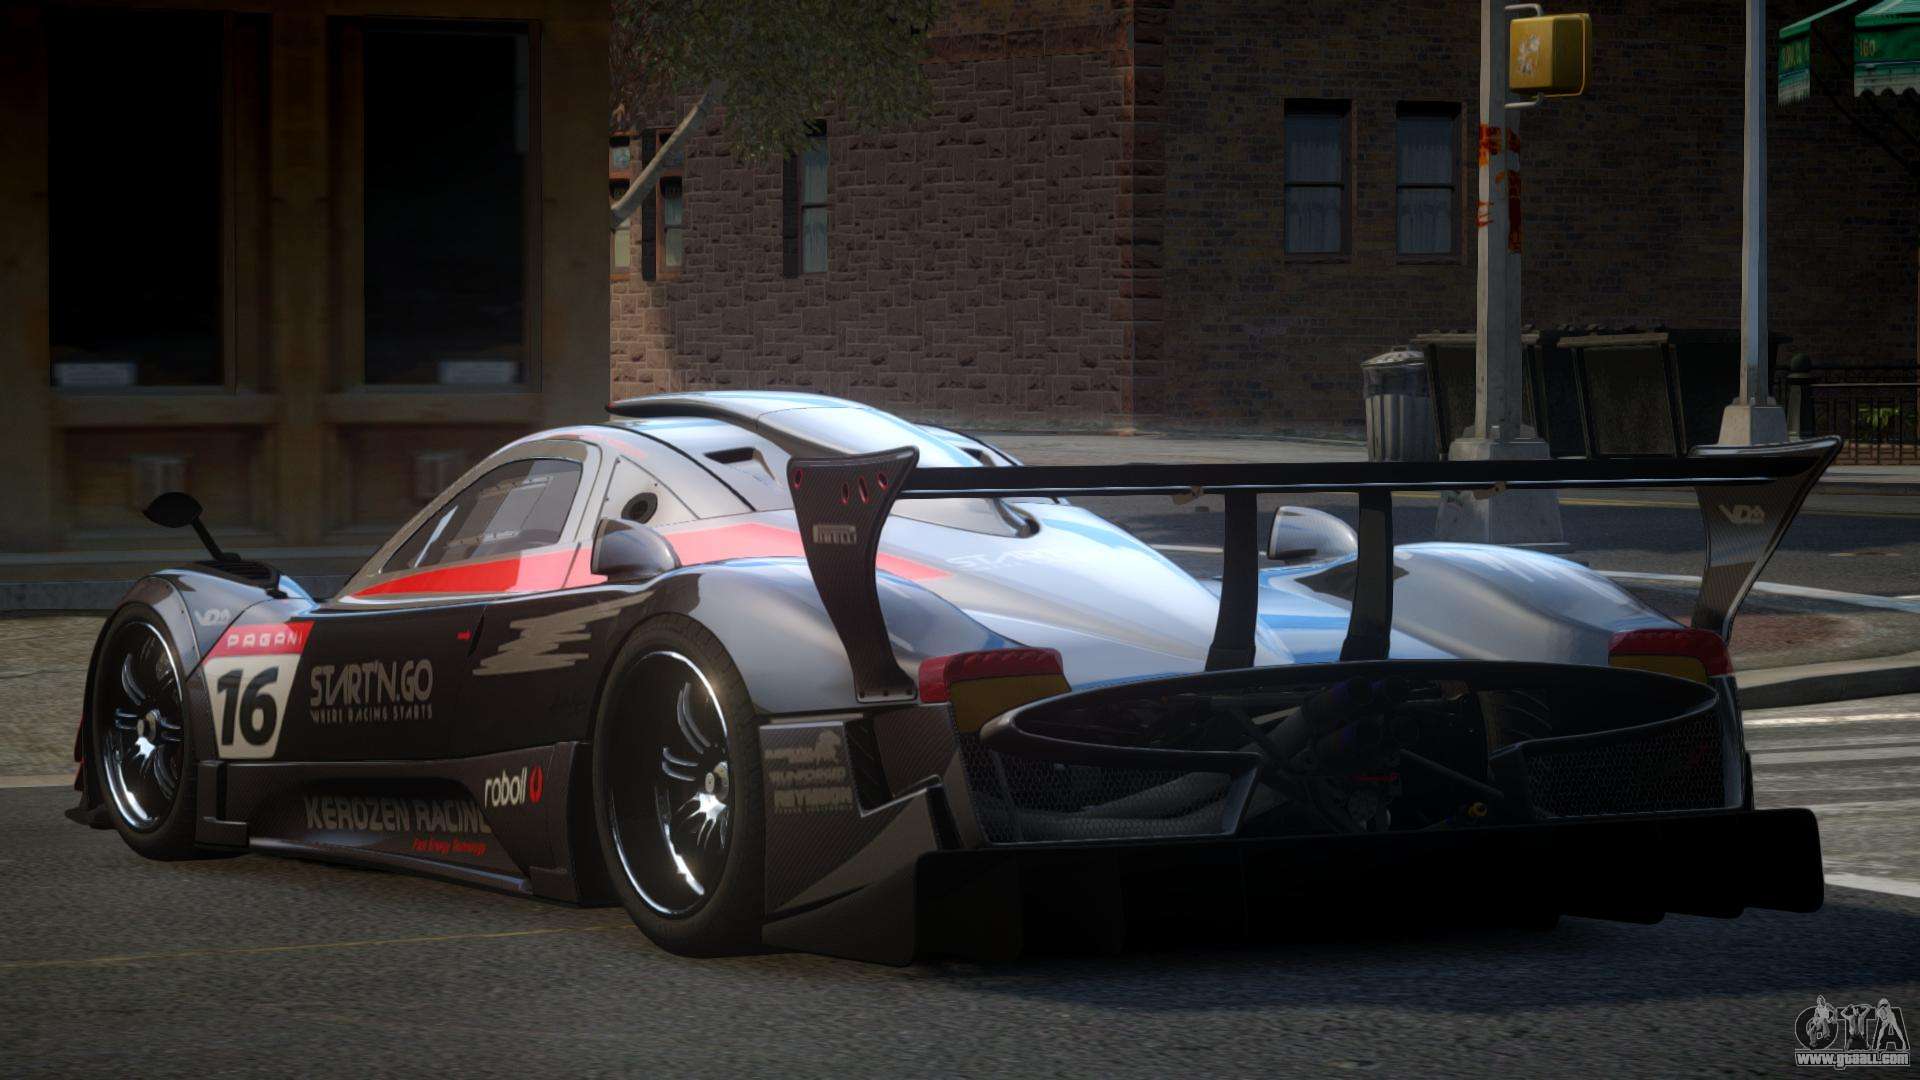 Pagani Zonda PSI Racing L7 for GTA 4